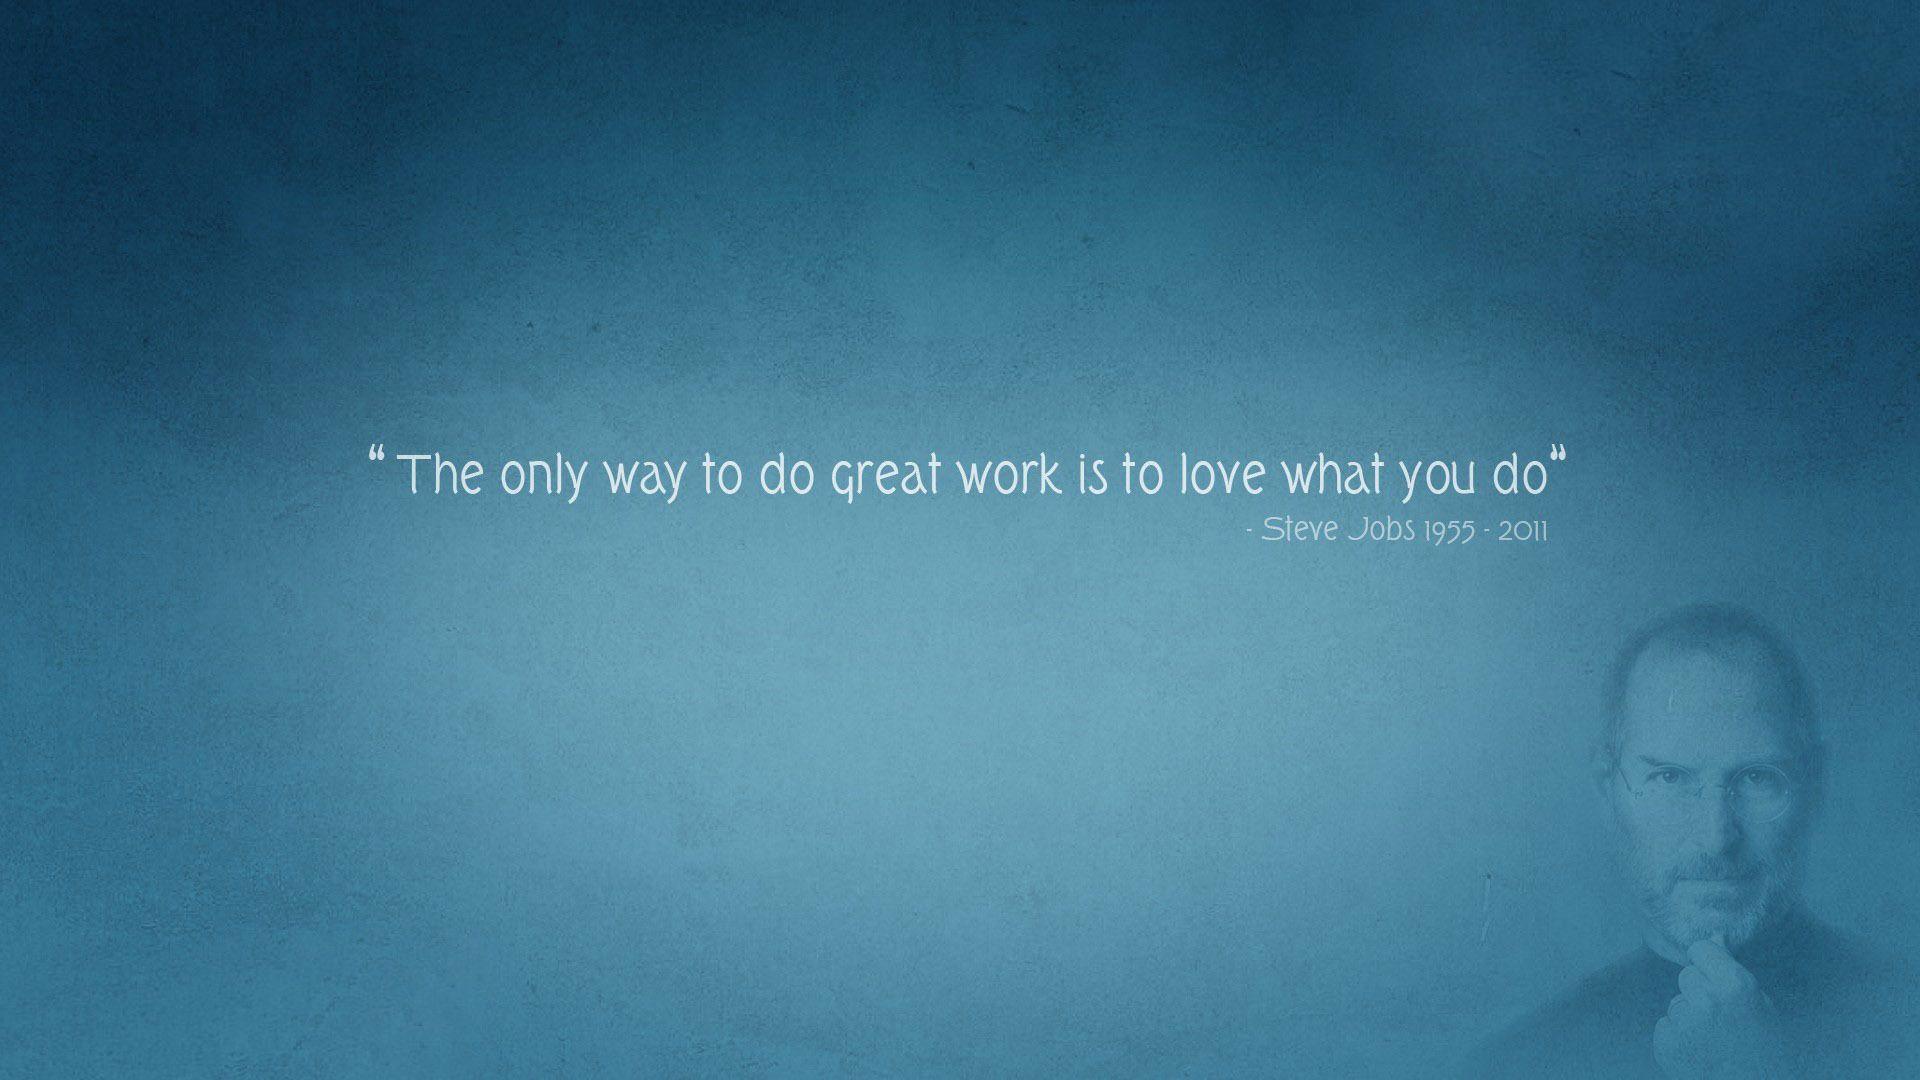 Steve Jobs quote Wallpaper #